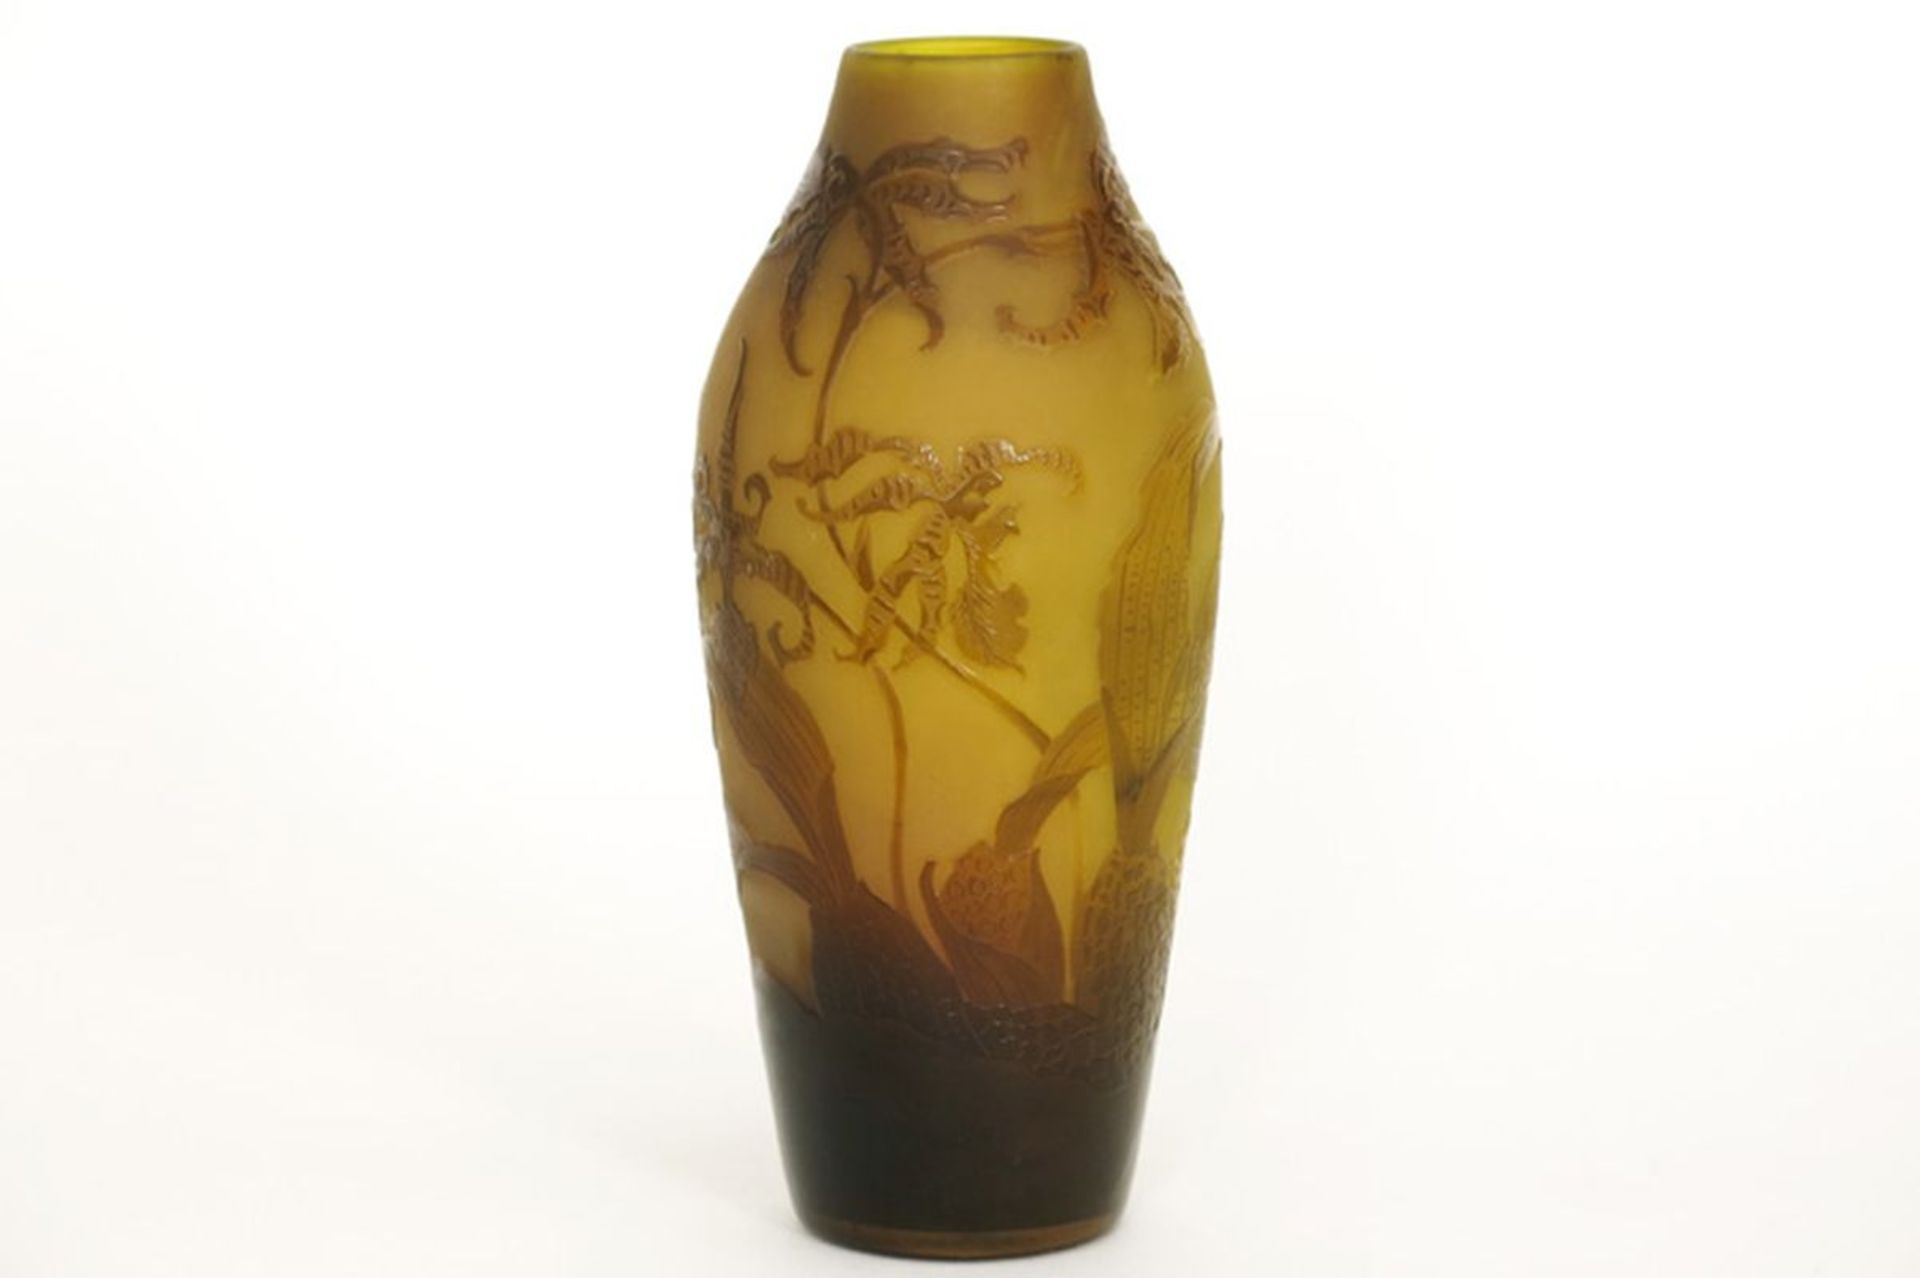 D'ARGENTAL kleine Art Nouveau-vaas in meerlagige cameo glaspasta met een floraal [...]